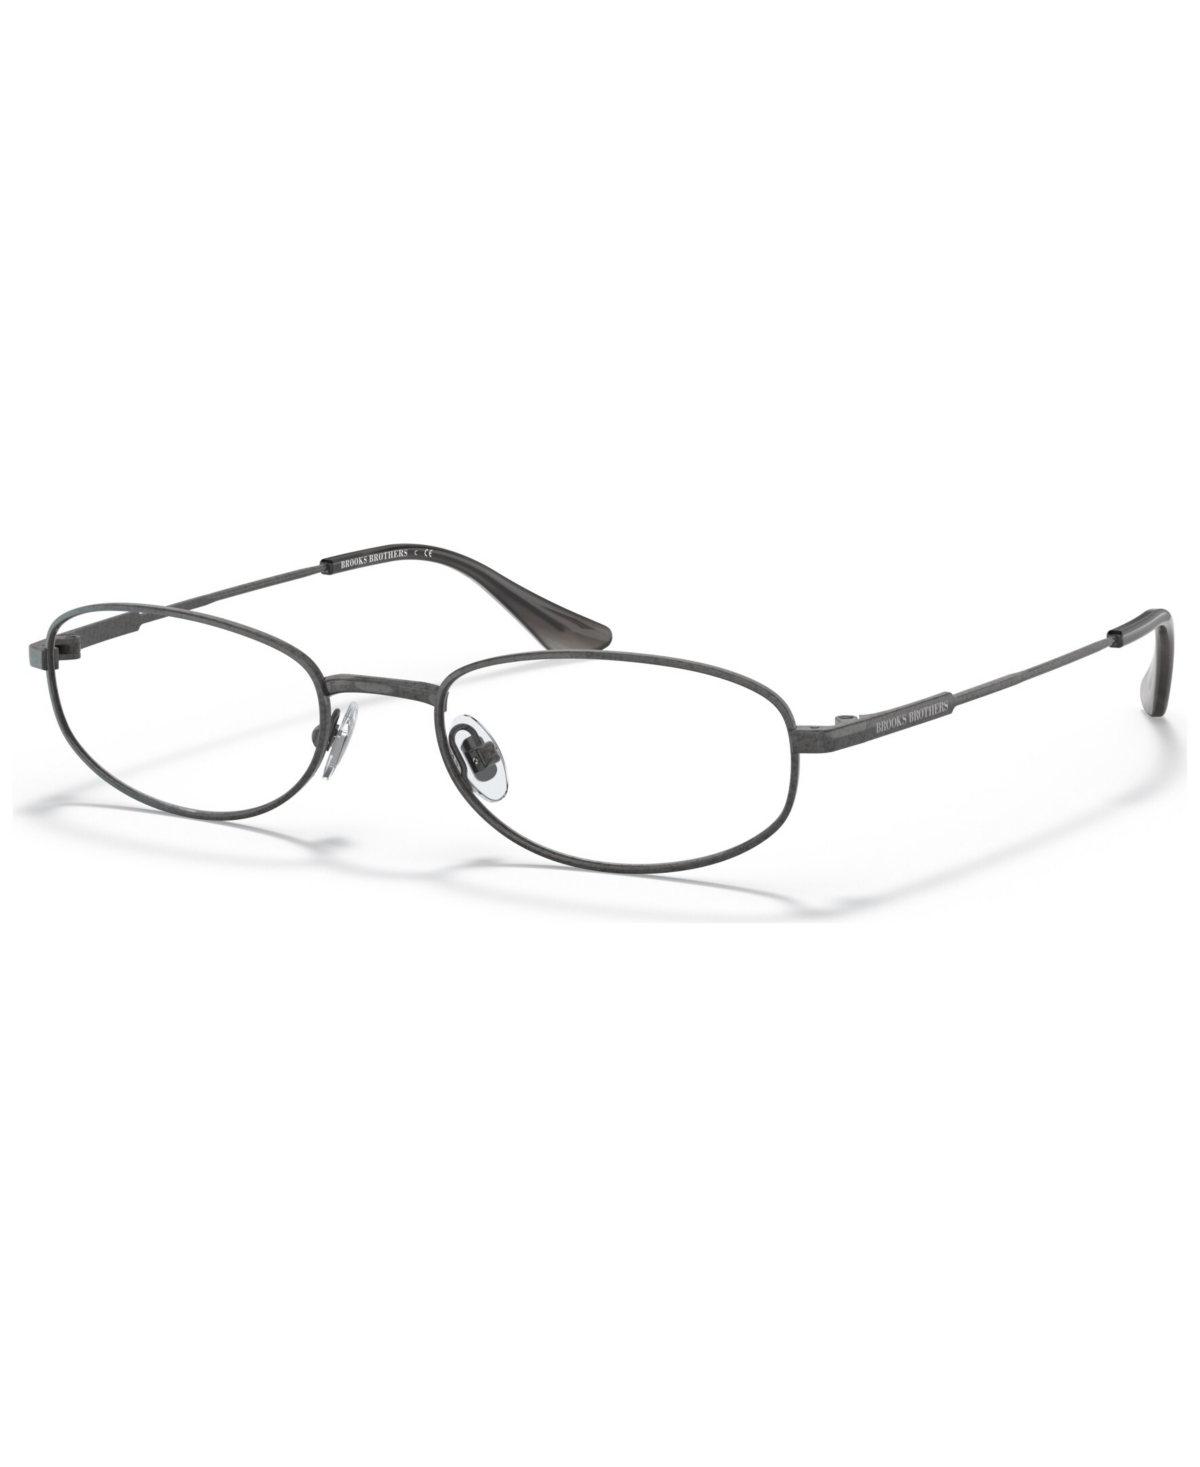 Men's Oval Eyeglasses, BB108352-o - Antique-Like Silver-Tone